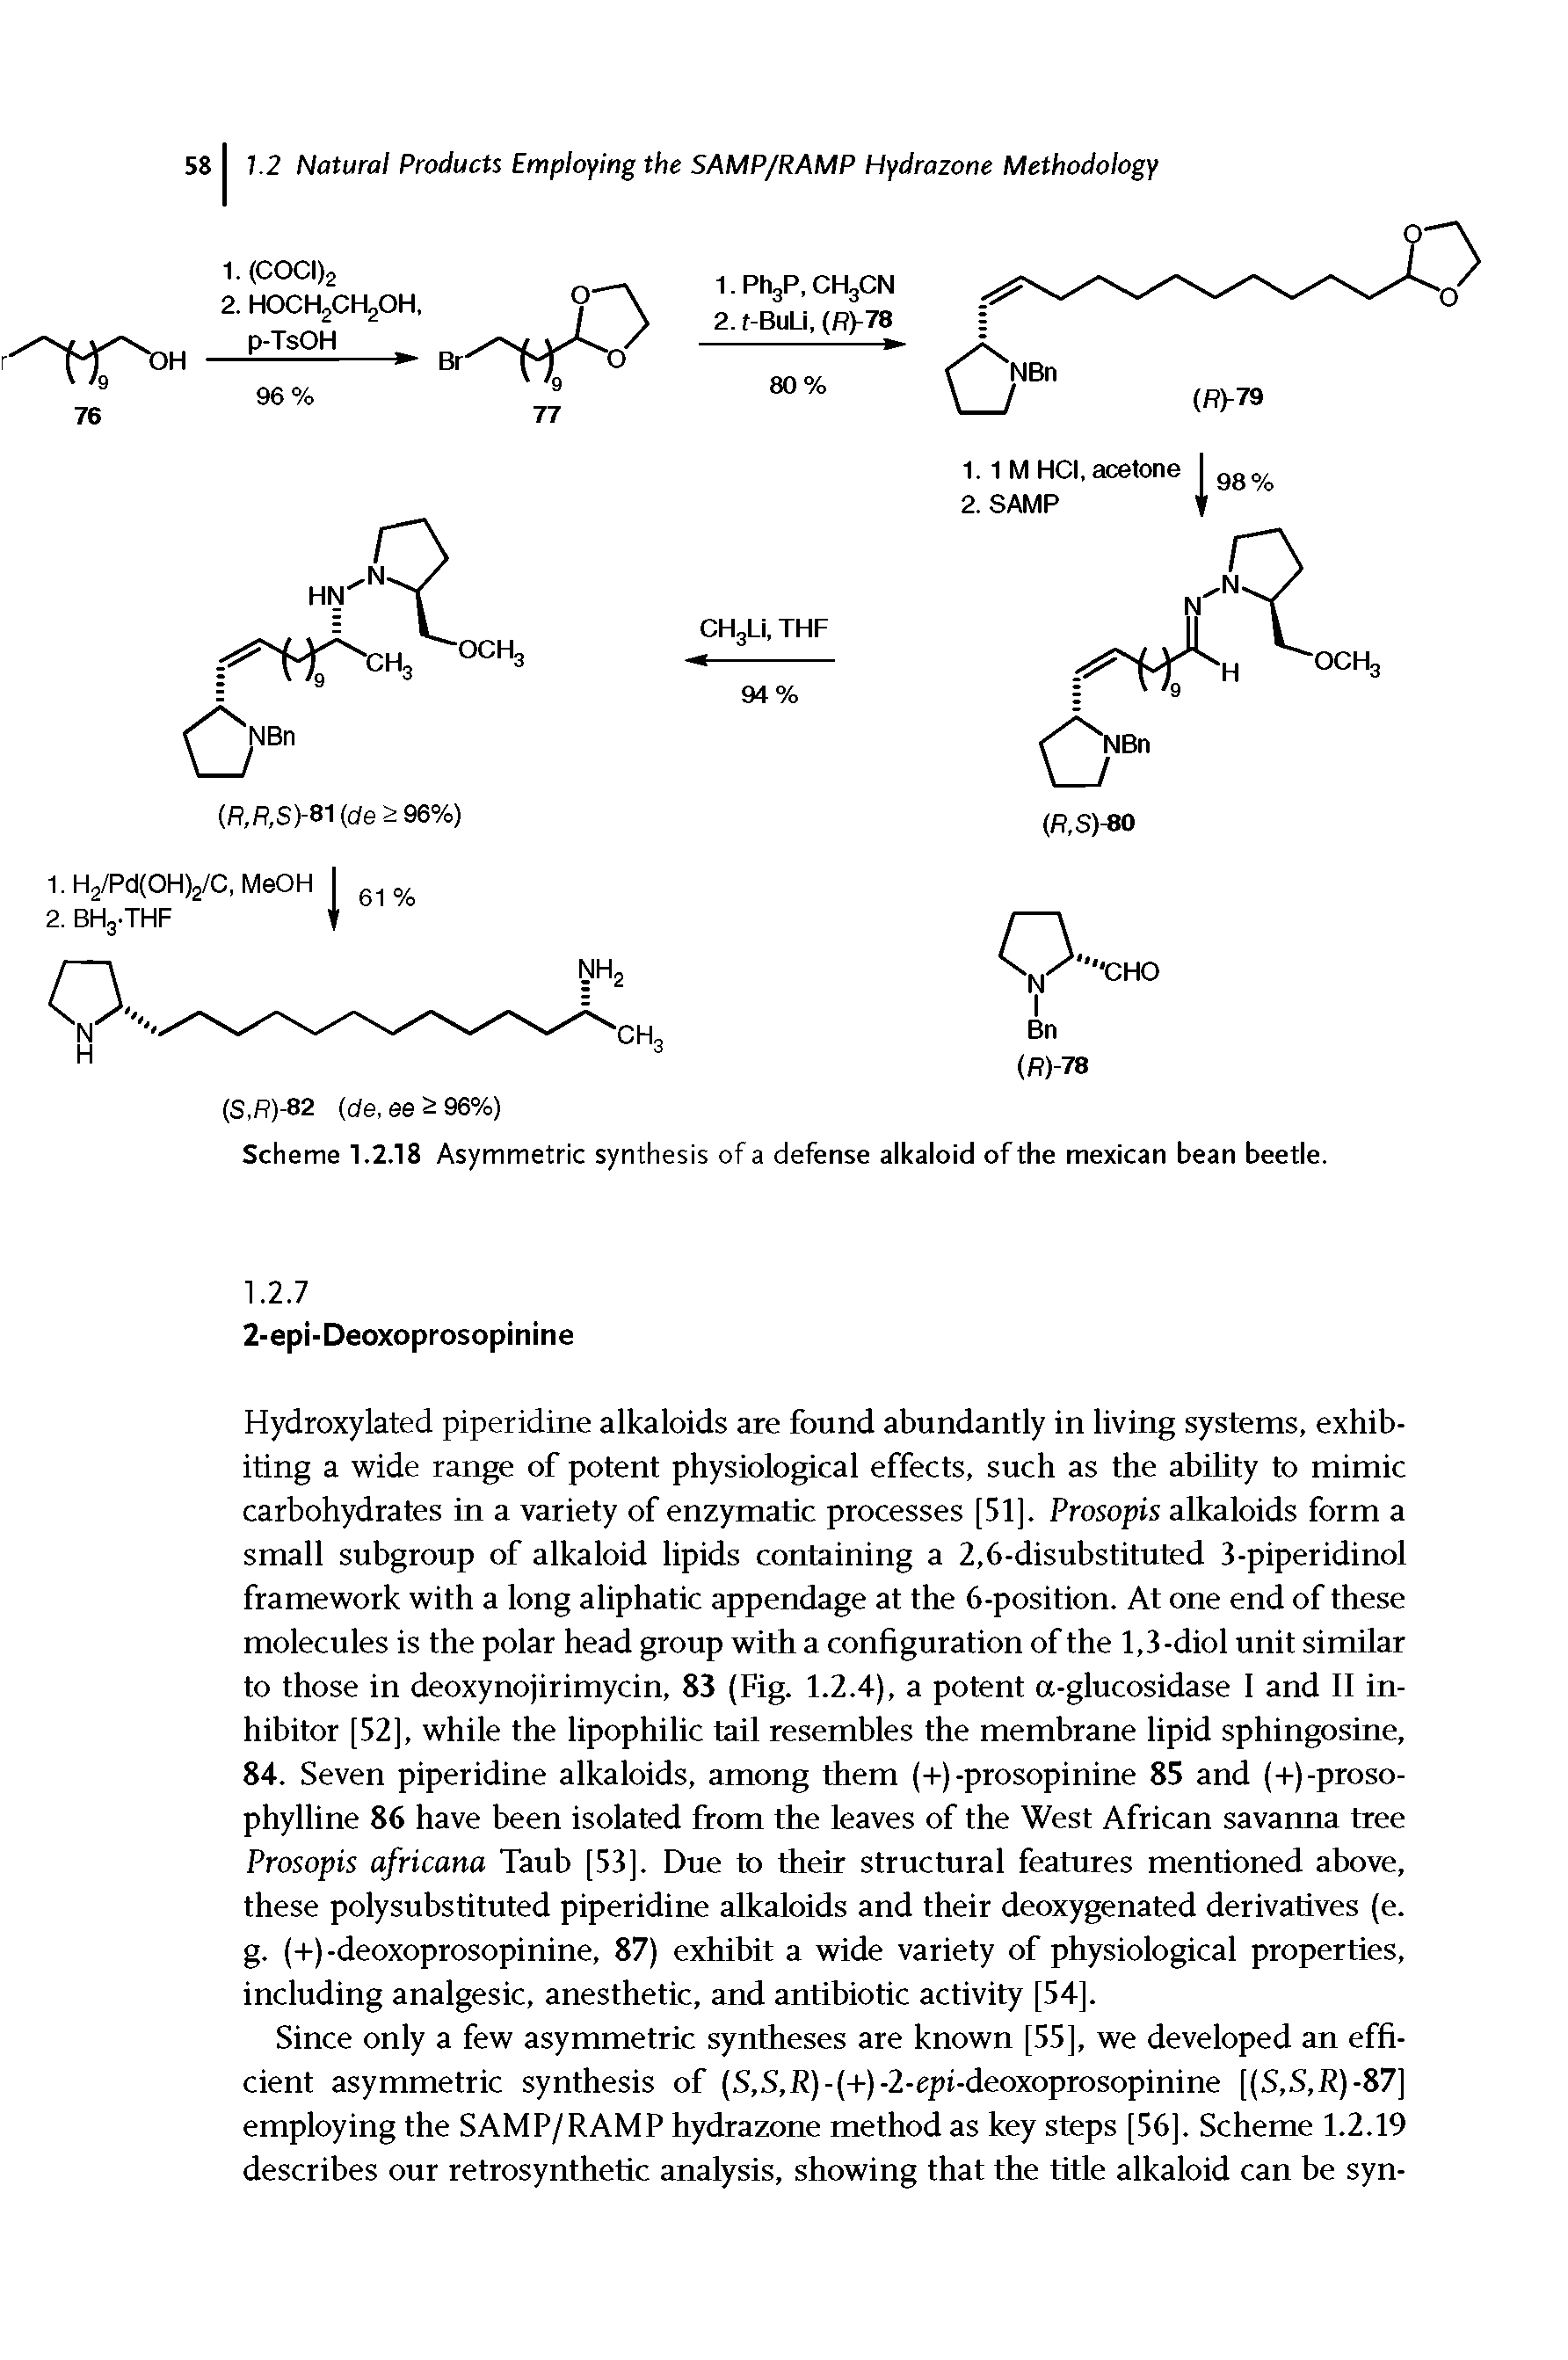 Scheme 1.2.18 Asymmetric synthesis of a defense alkaloid of the mexican bean beetle.